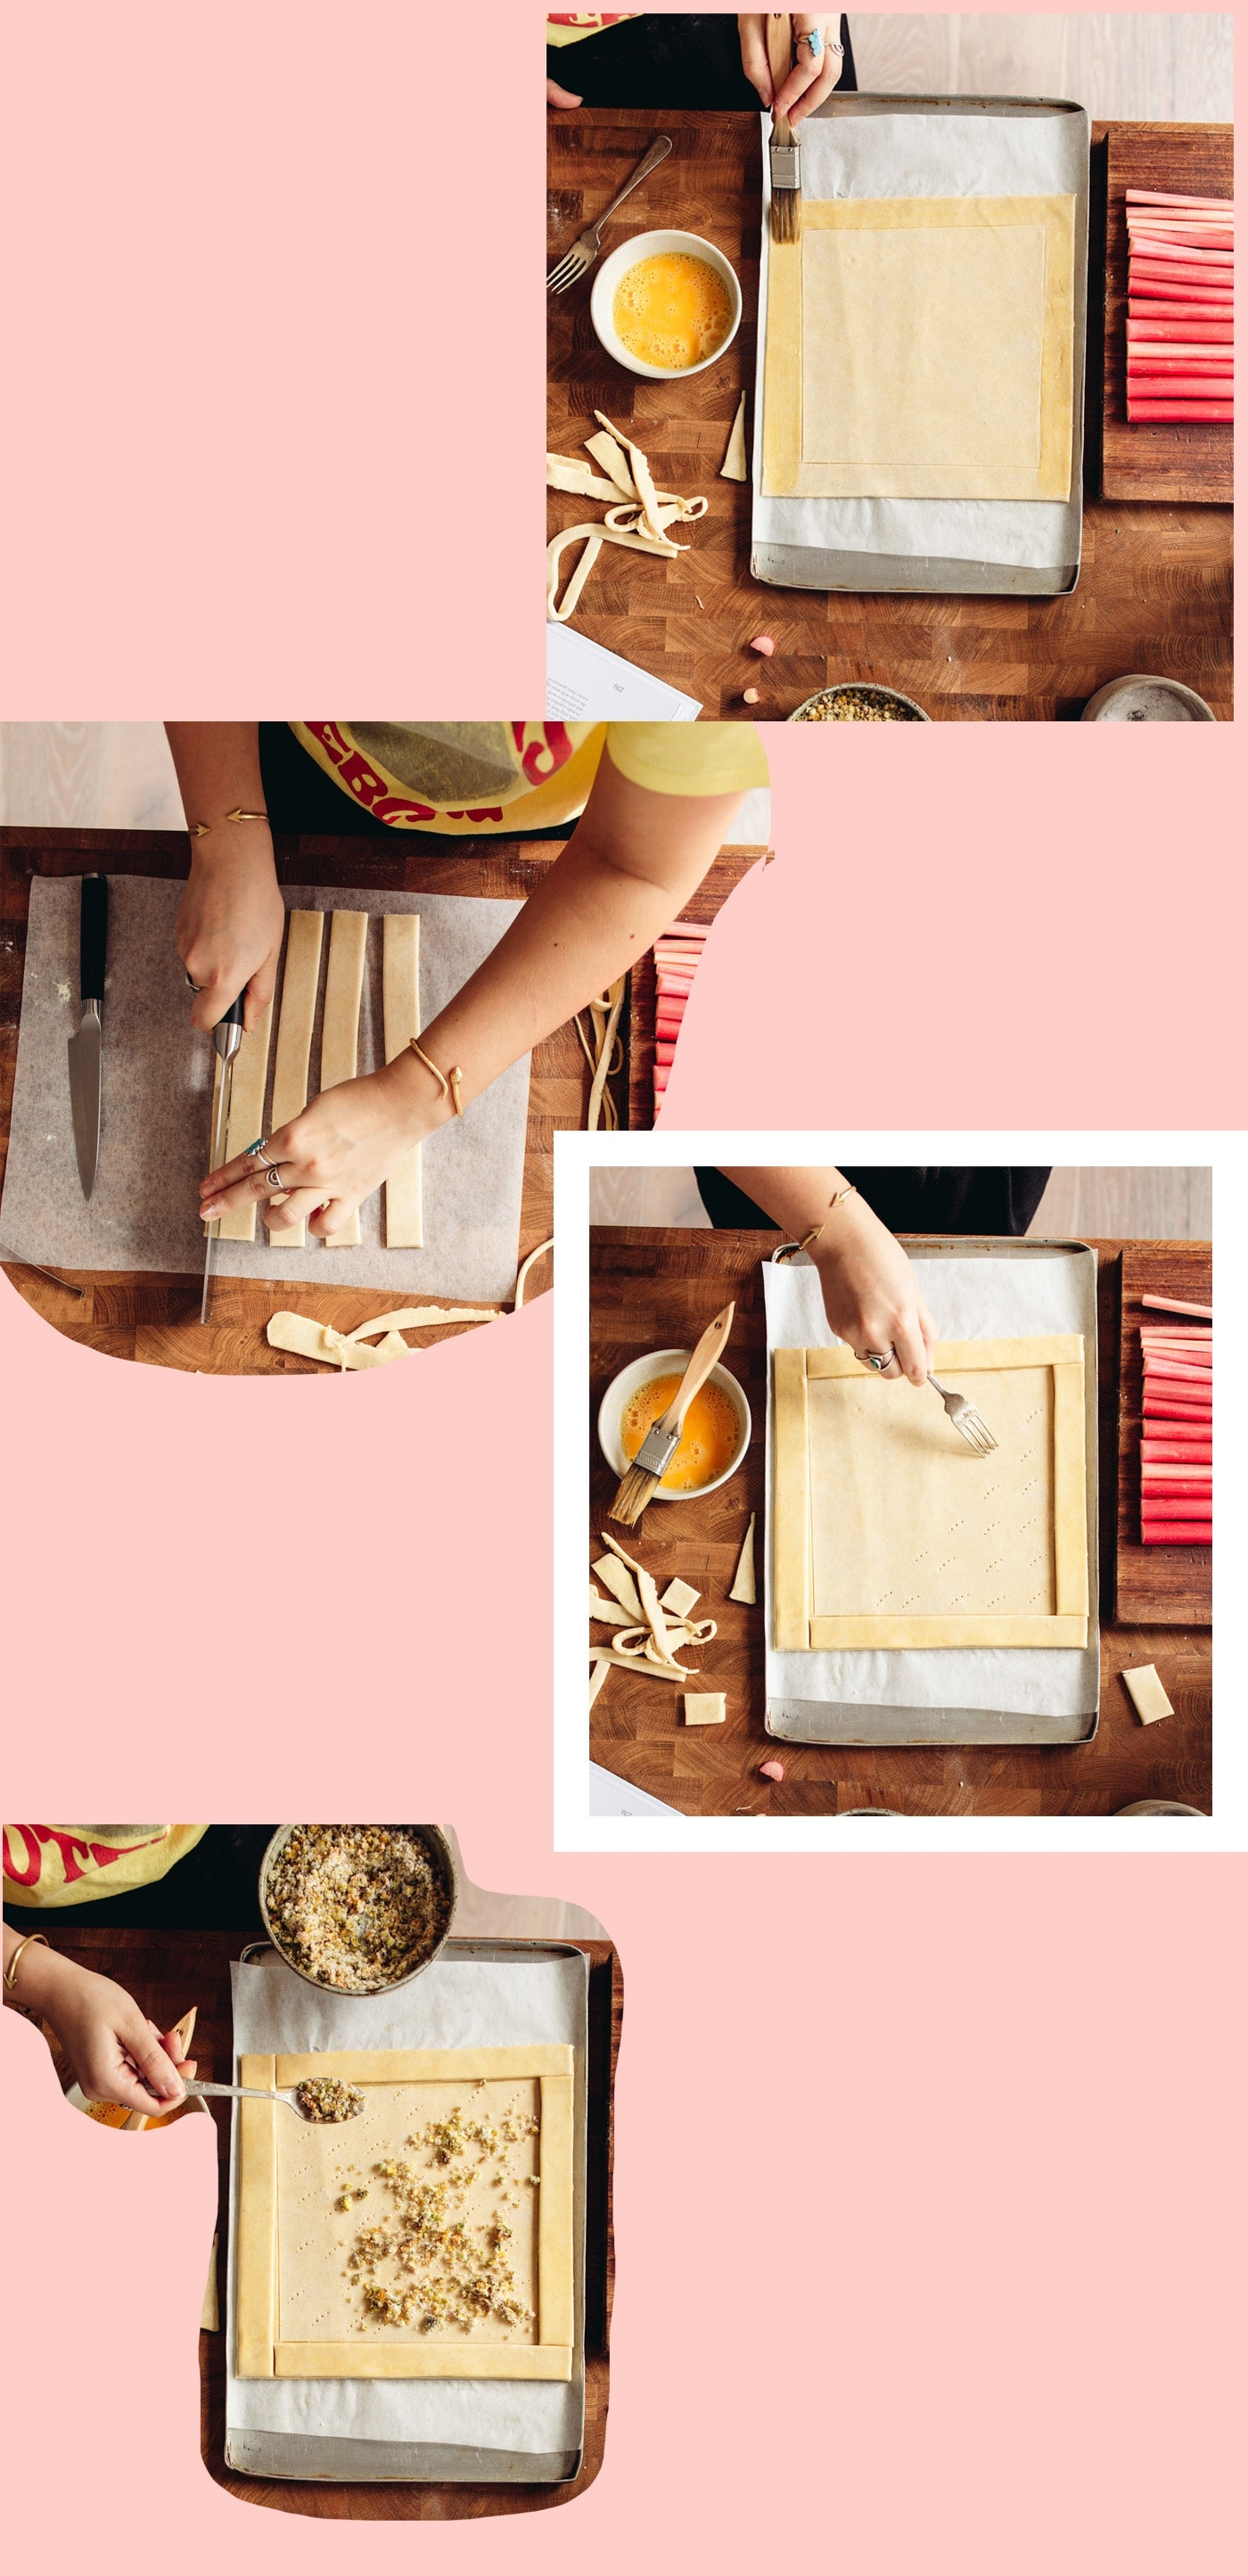 Simple Rhubarb Tart with chopped pistachios by Izy Hossack